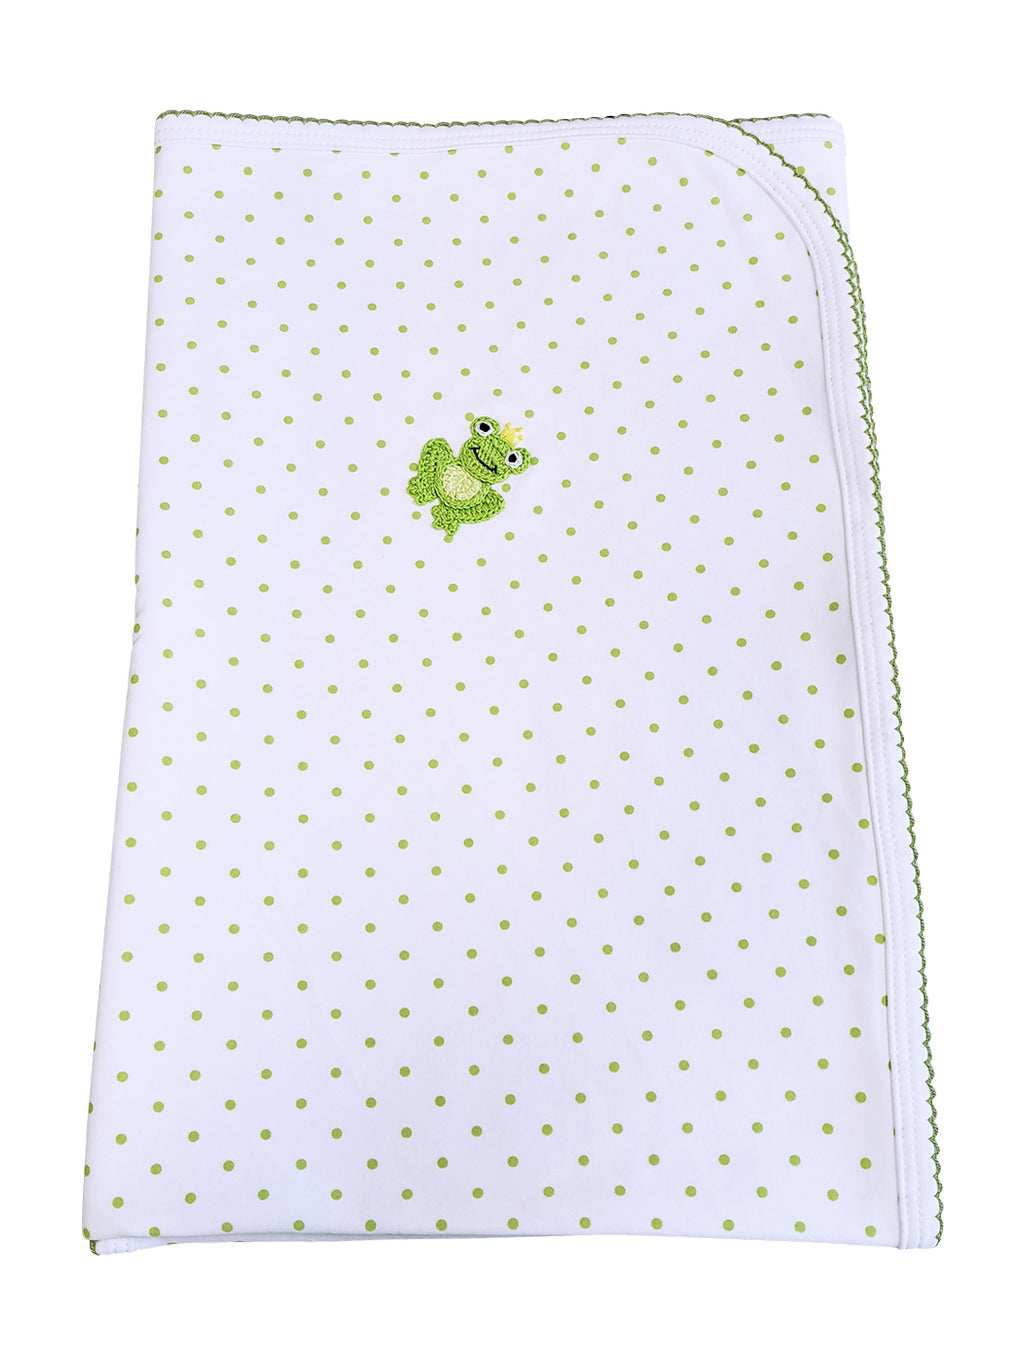 Frog Crochet - Unisex baby blanket Pima Cotton - Little Threads Inc. Children's Clothing